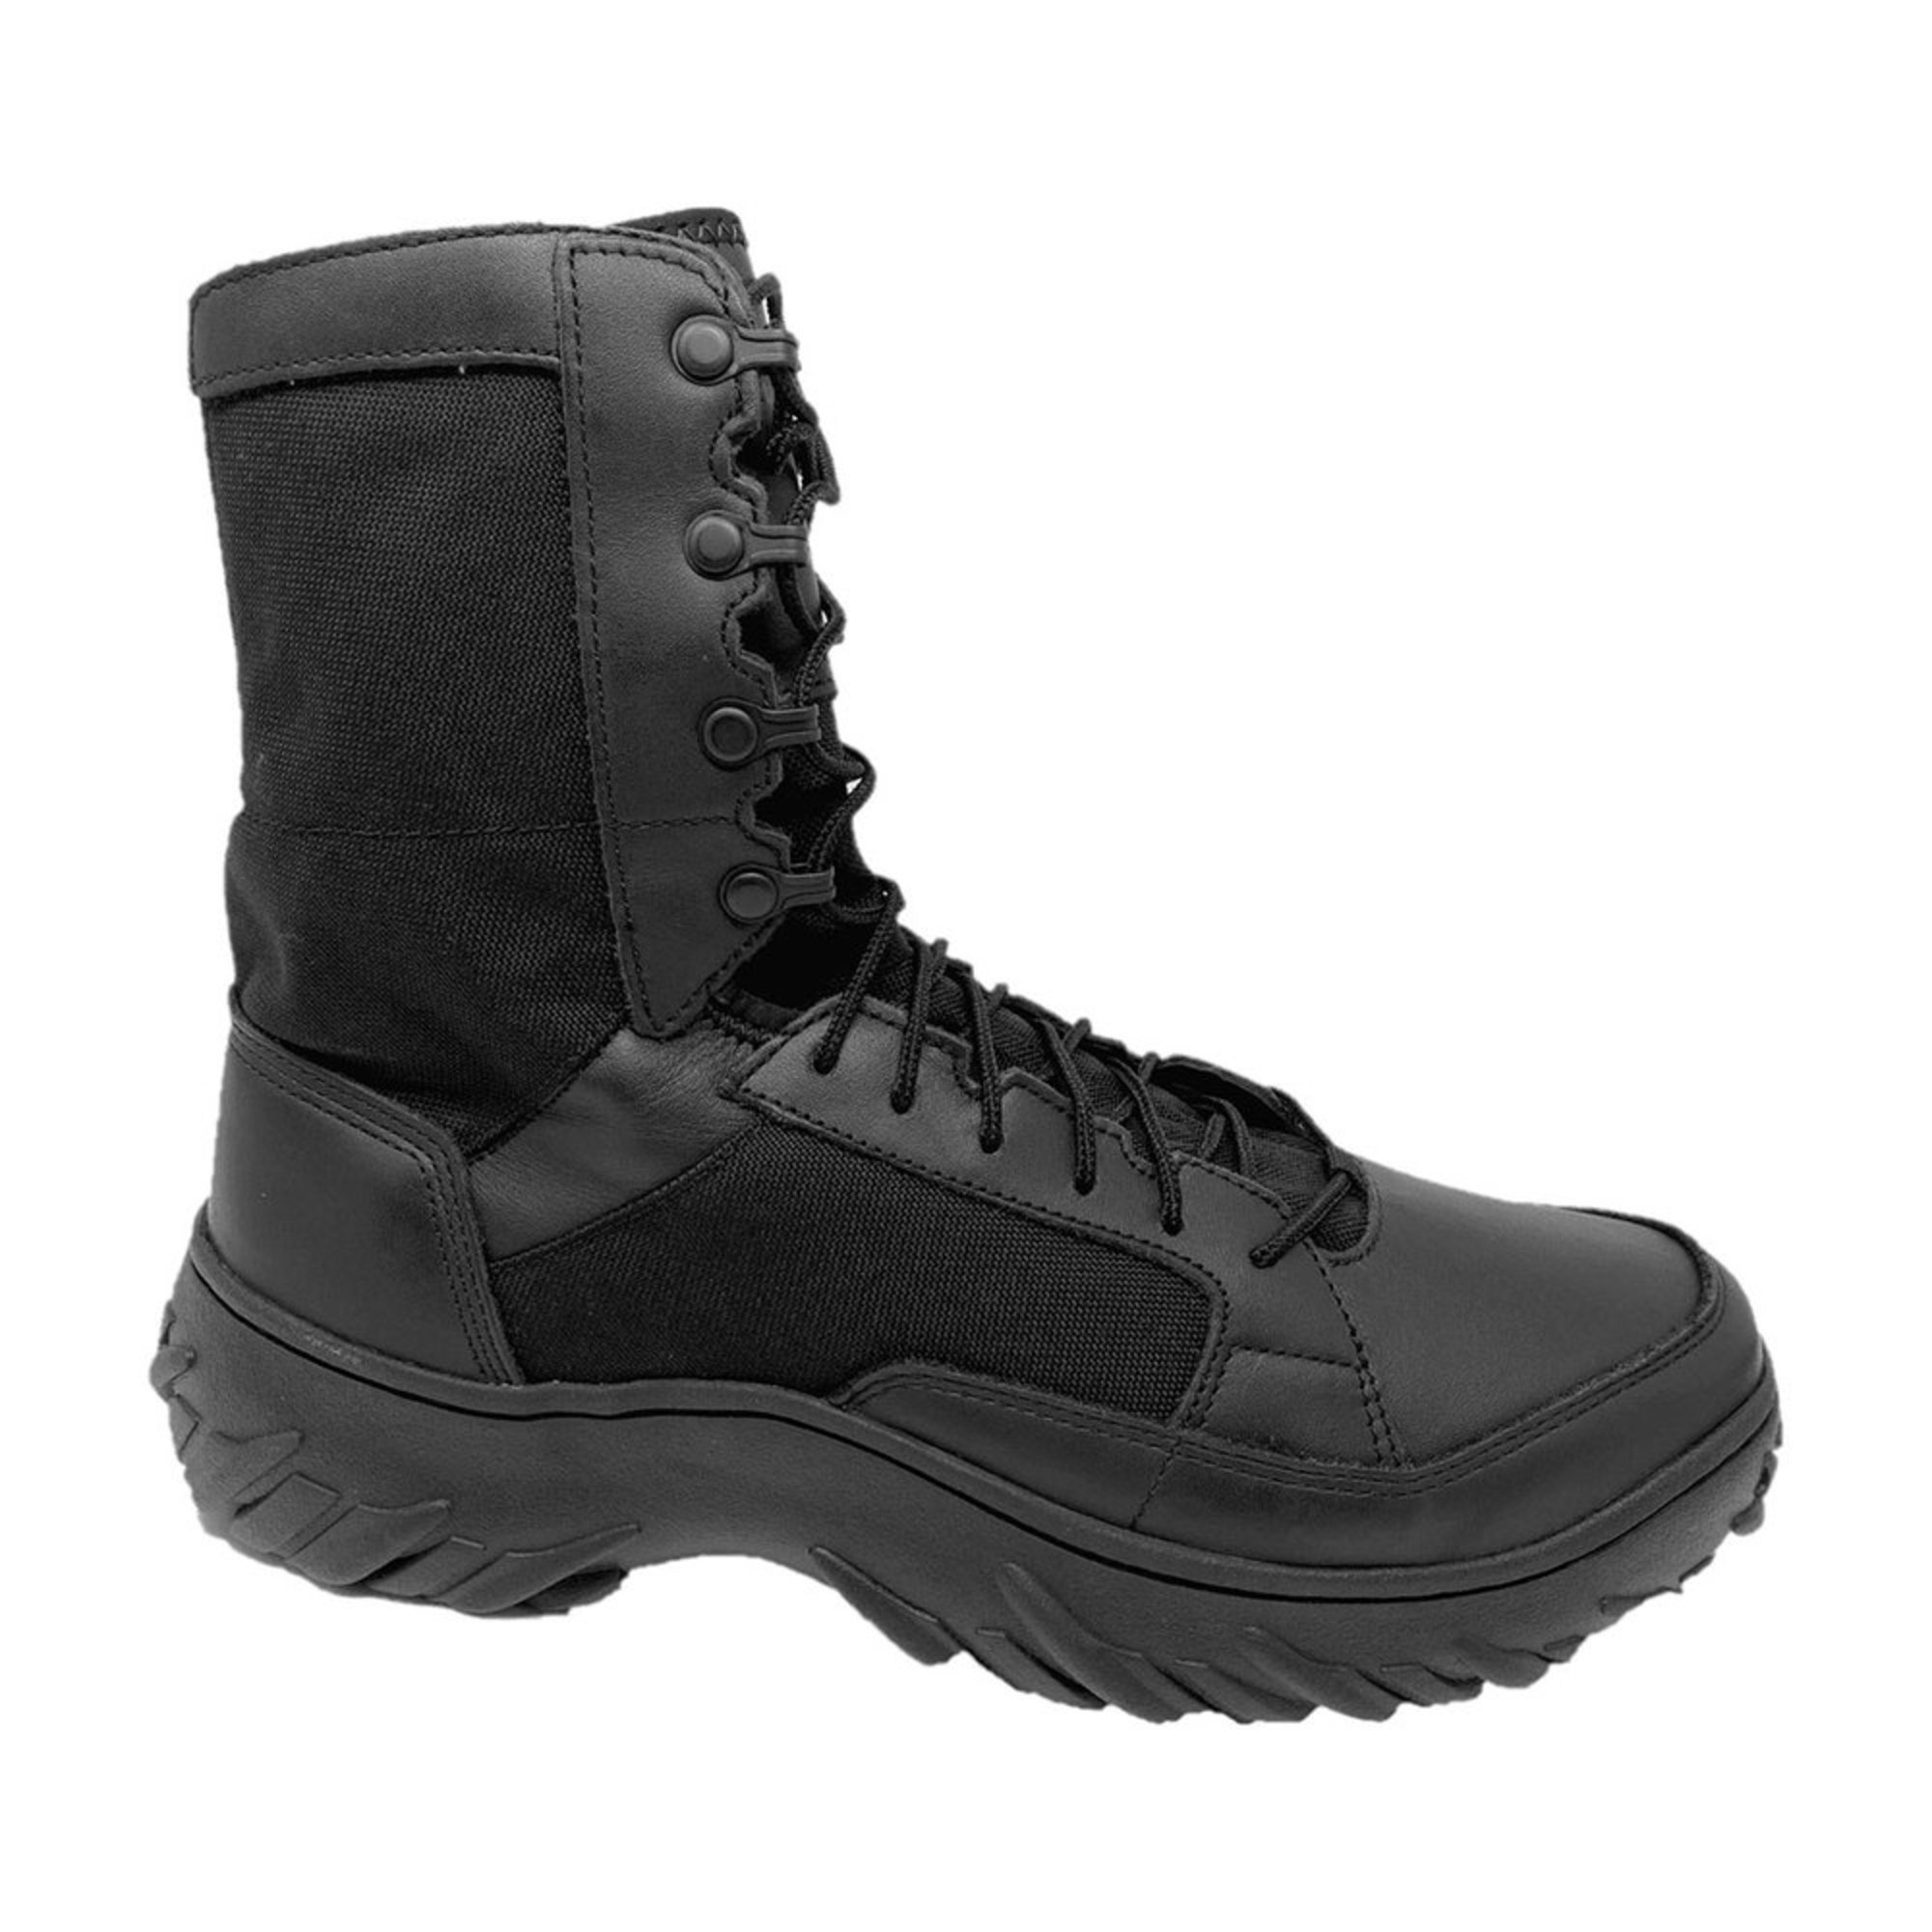 Oakley Men's Field Assault Boot | Men's Boots | Shoes - Shop Your Navy ...